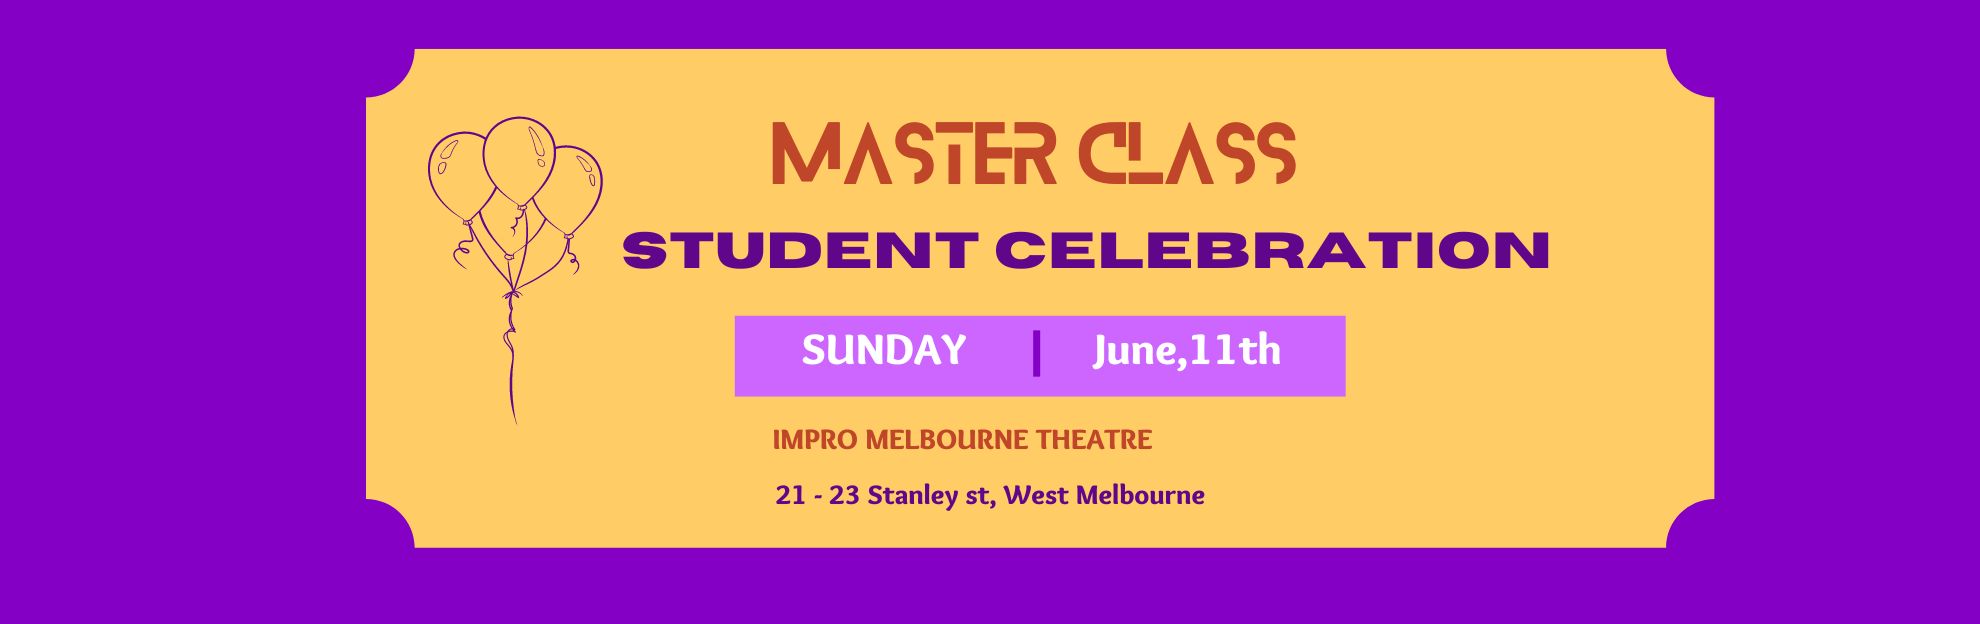 Master class - Student Celebration